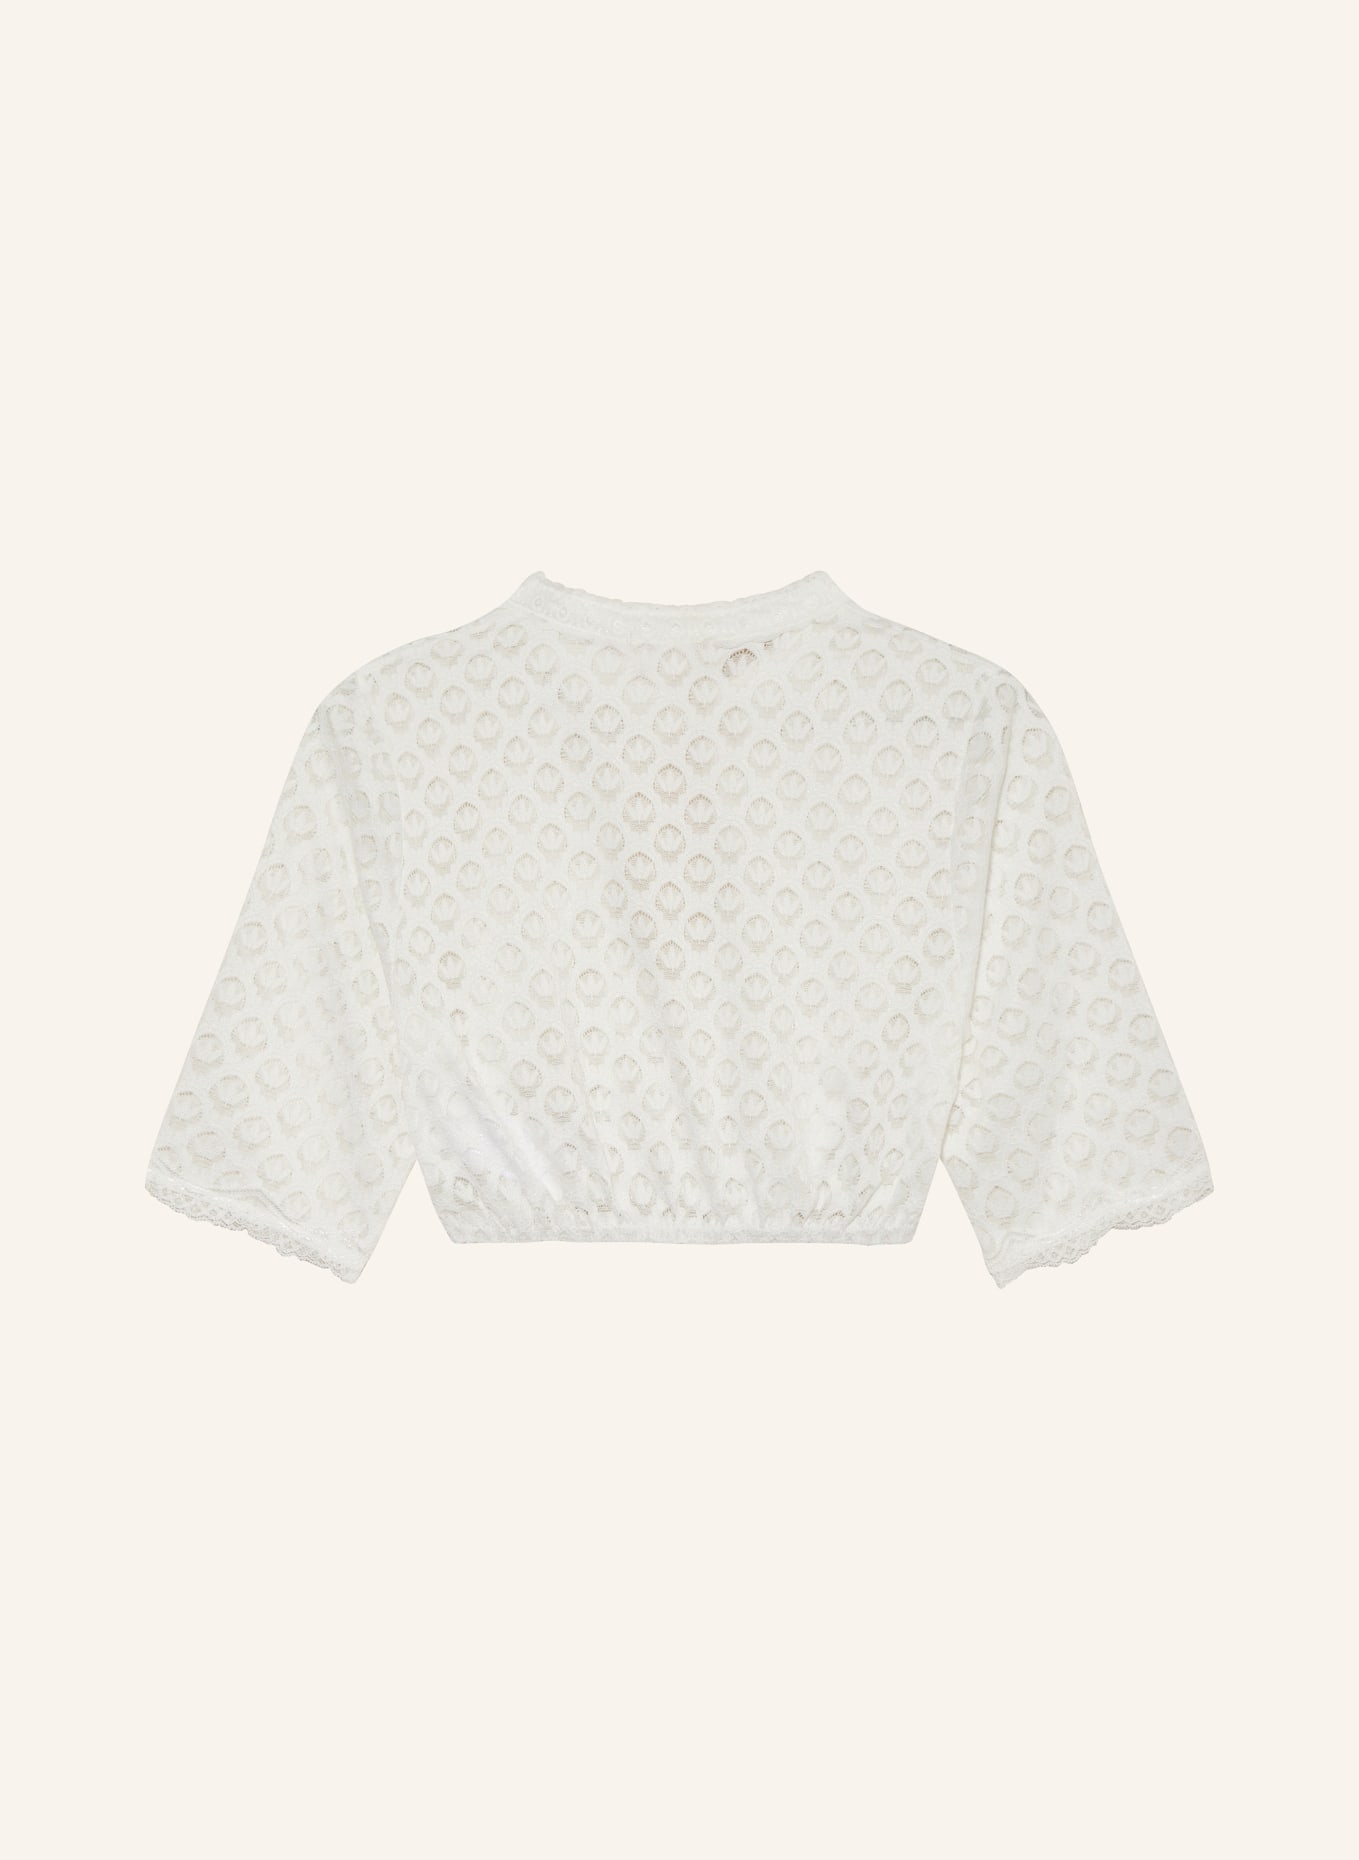 KRÜGER Dirndl blouse made of lace, Color: WHITE (Image 2)